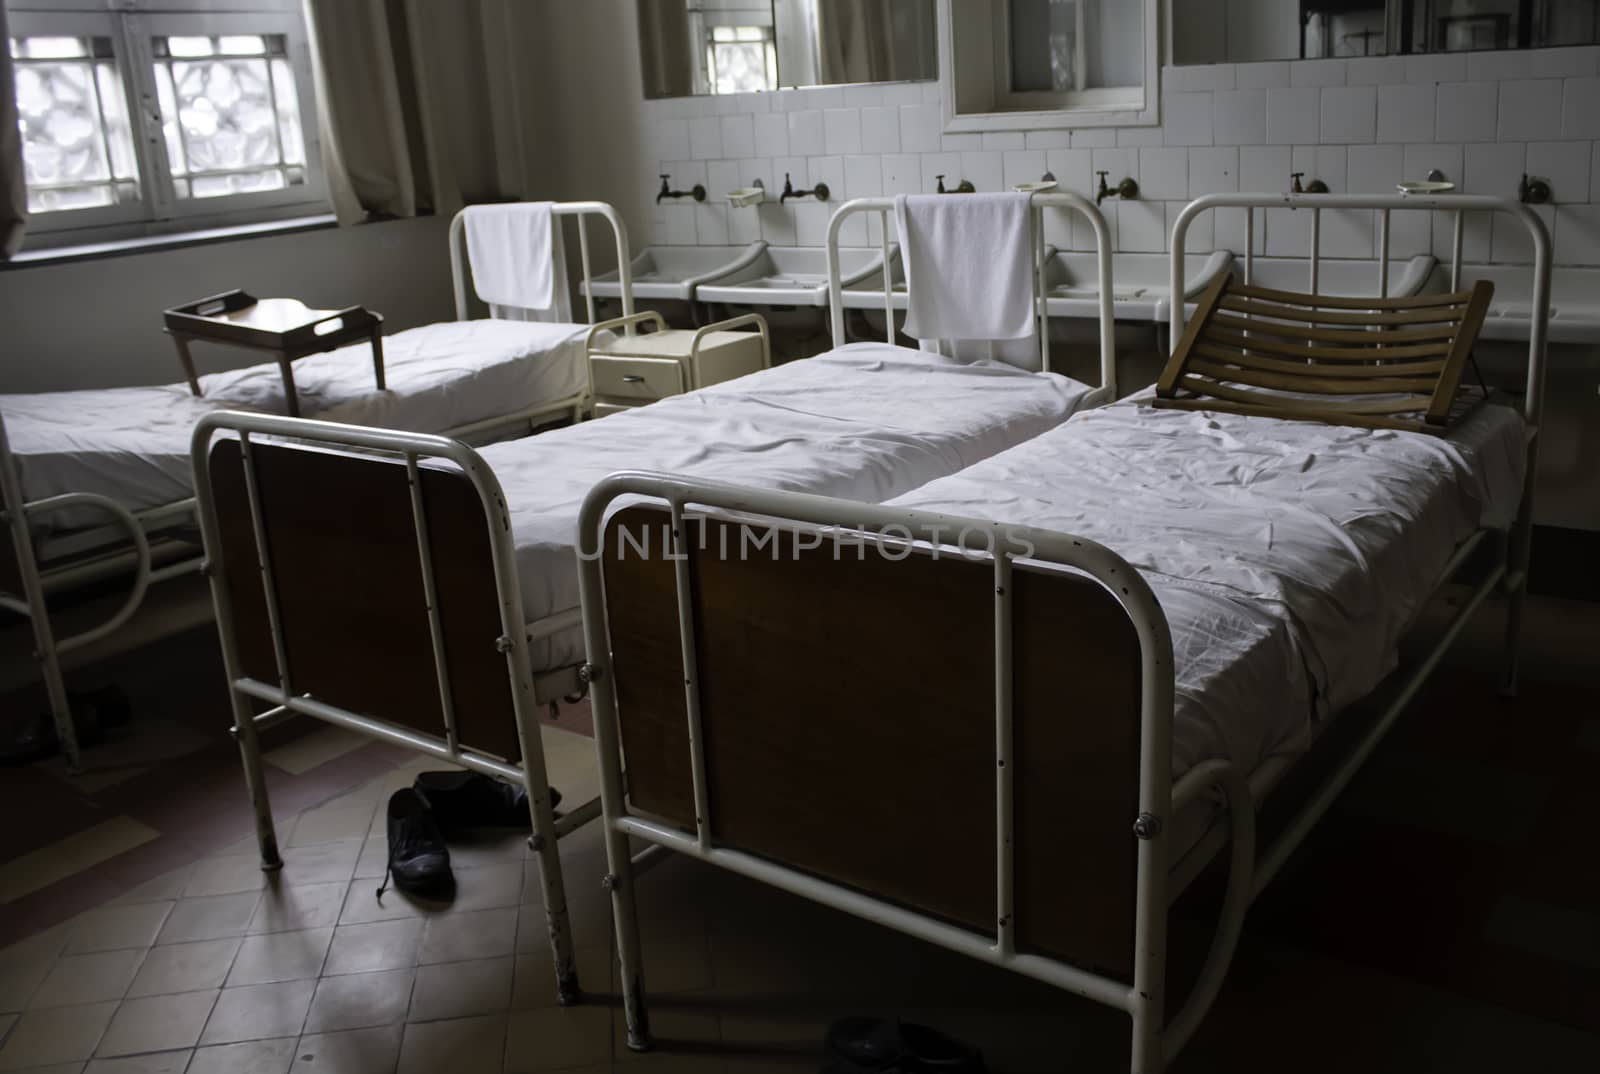 Old hospital beds by celiafoto